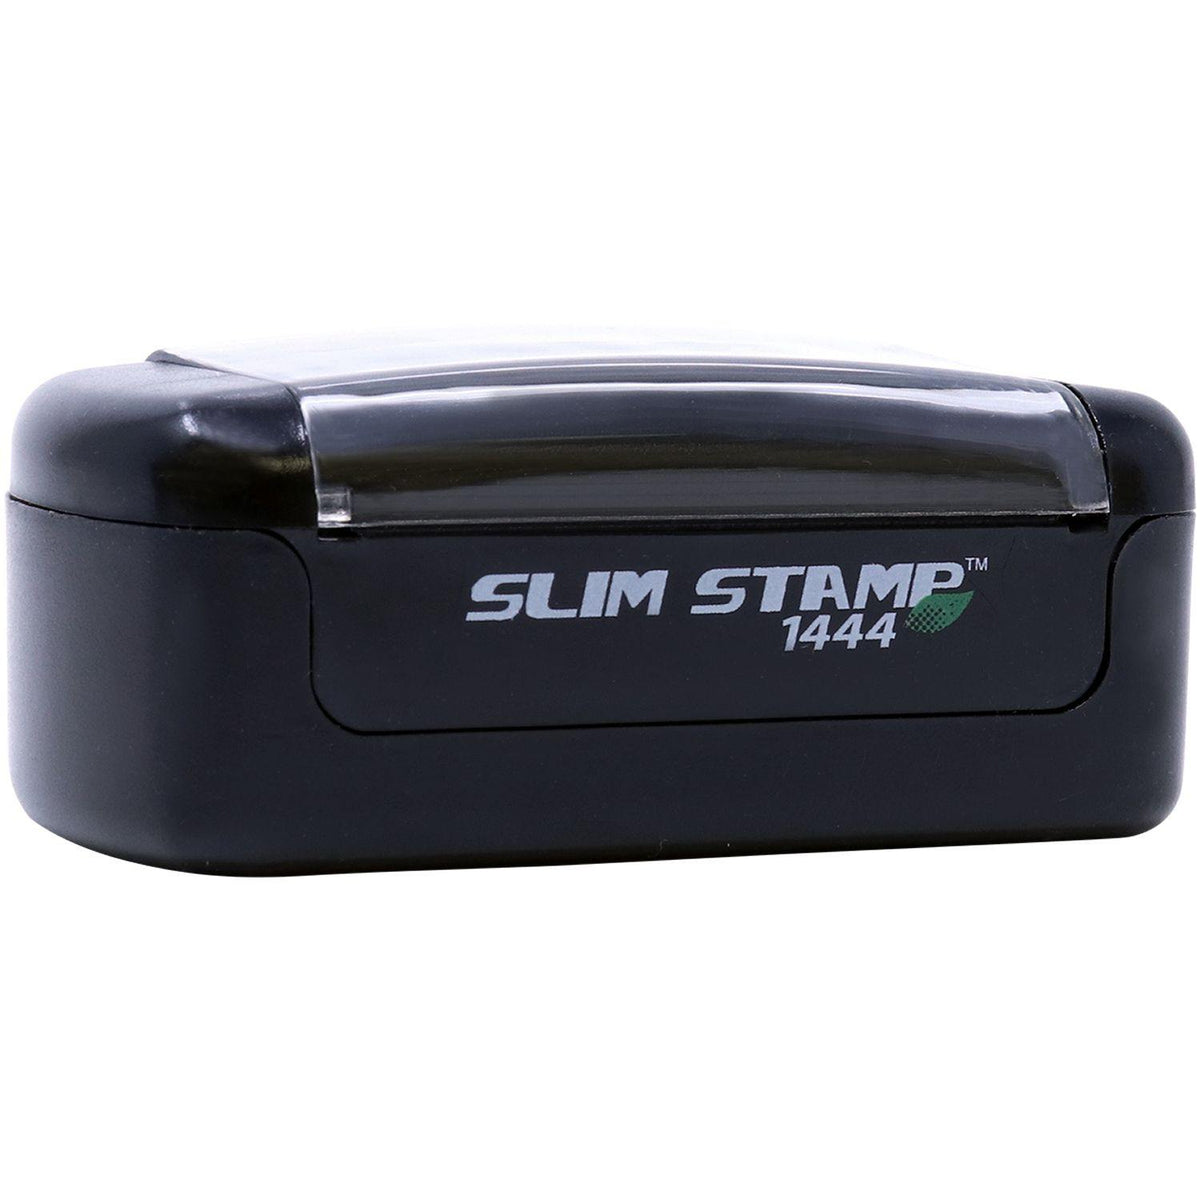 Slim Pre Inked Bravo Stamp - Engineer Seal Stamps - Brand_Slim, Impression Size_Small, Stamp Type_Pre-Inked Stamp, Type of Use_Teacher